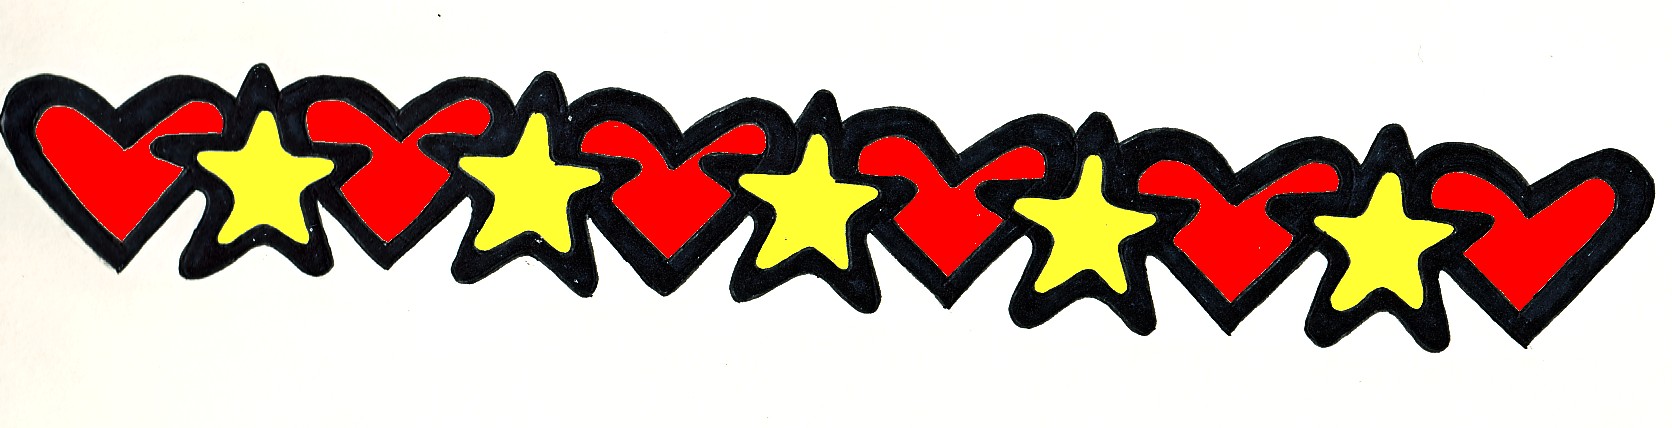 free clip art hearts and stars - photo #48